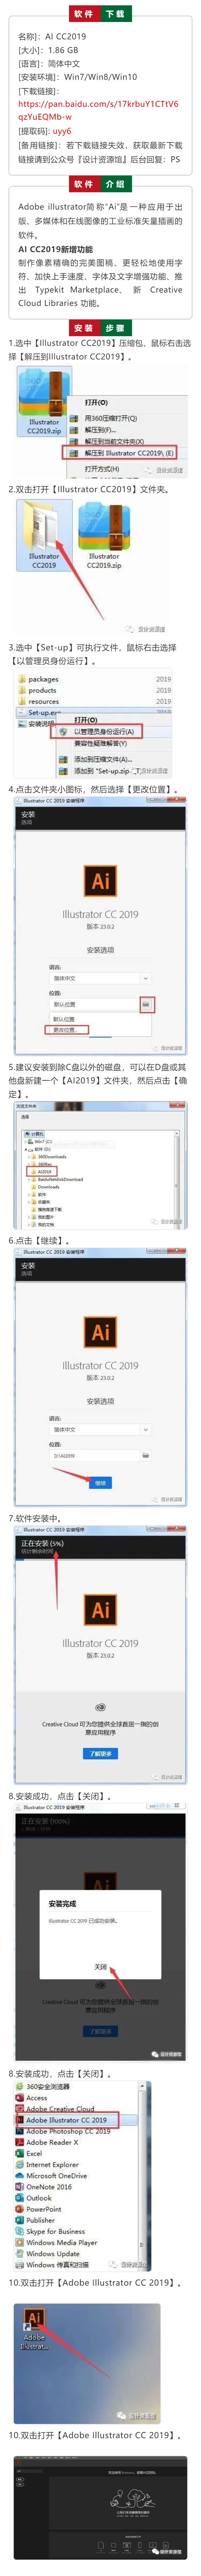 Illustrator CC 2019安装包及教程